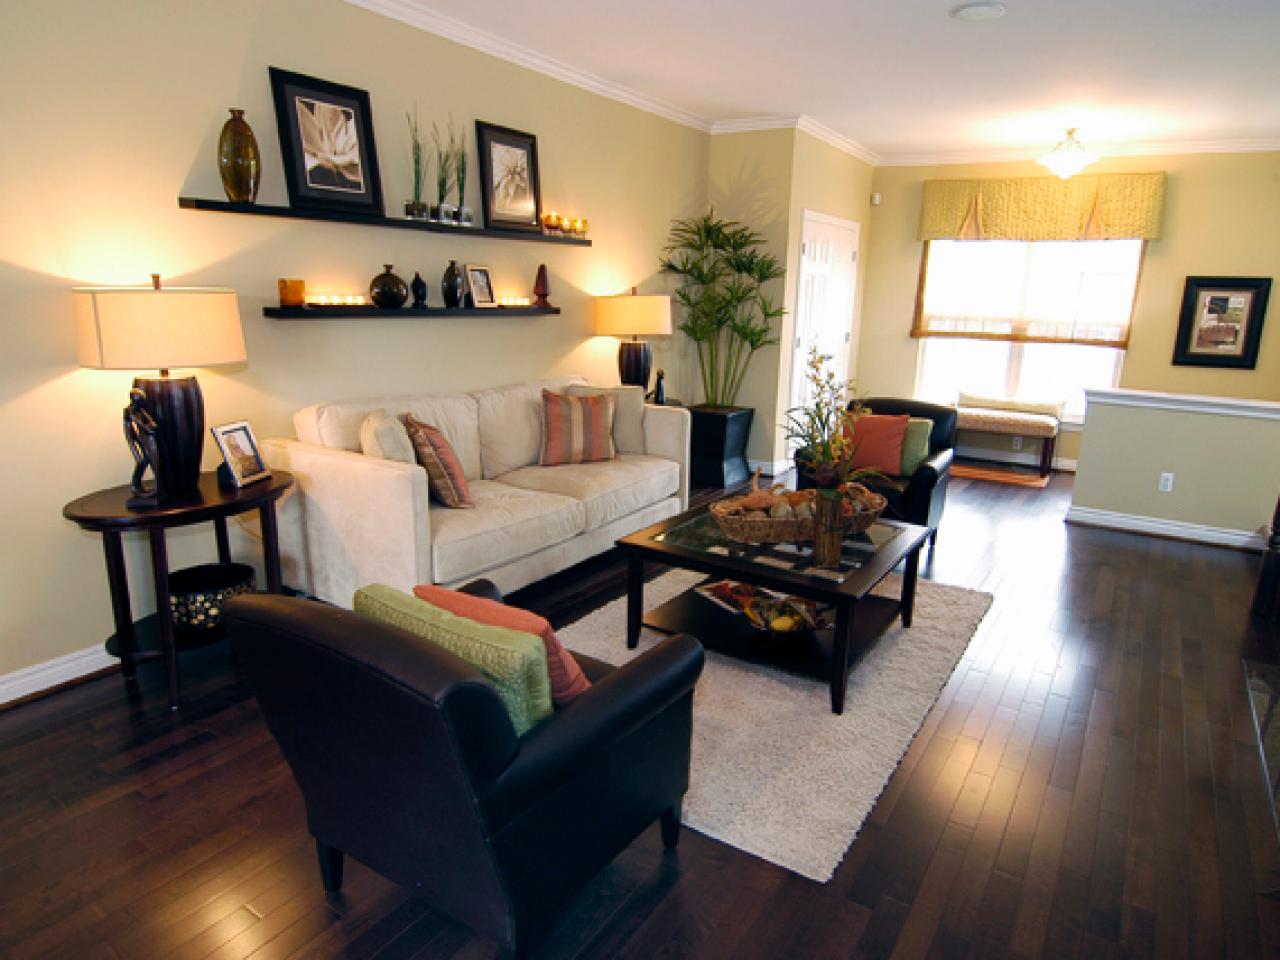 Transitional Living Room With Floating Shelves HGTV